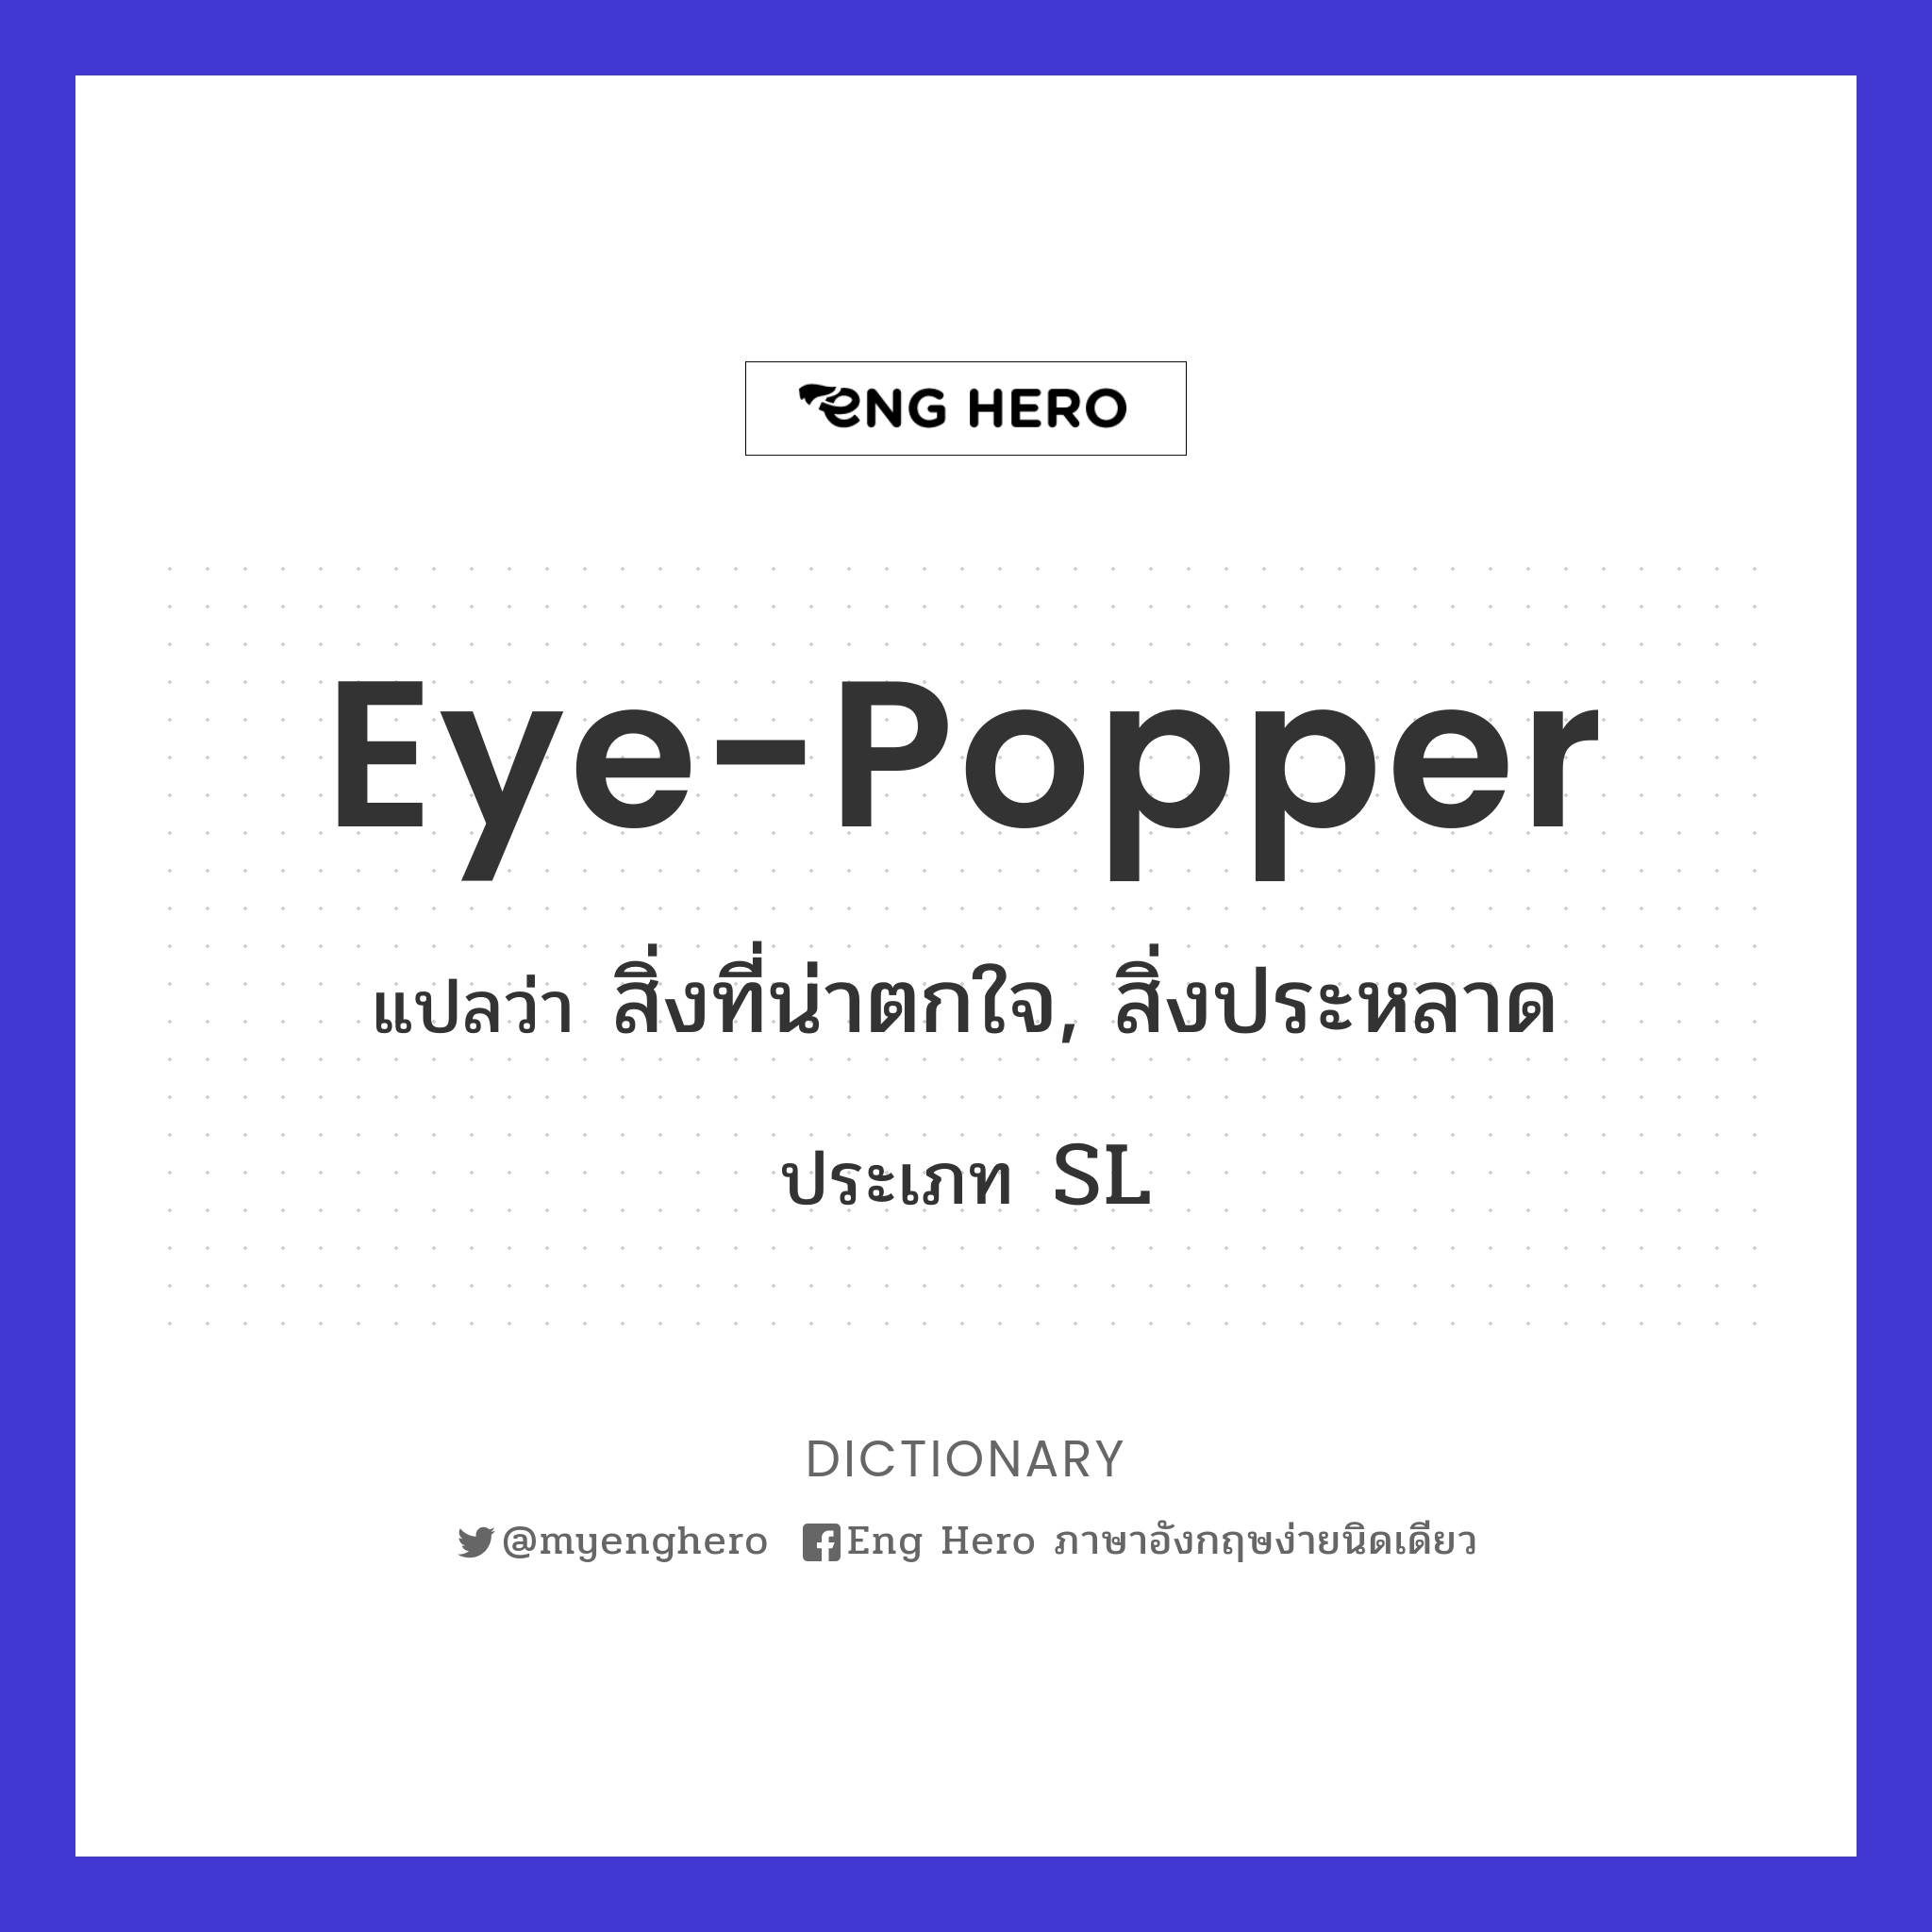 eye-popper